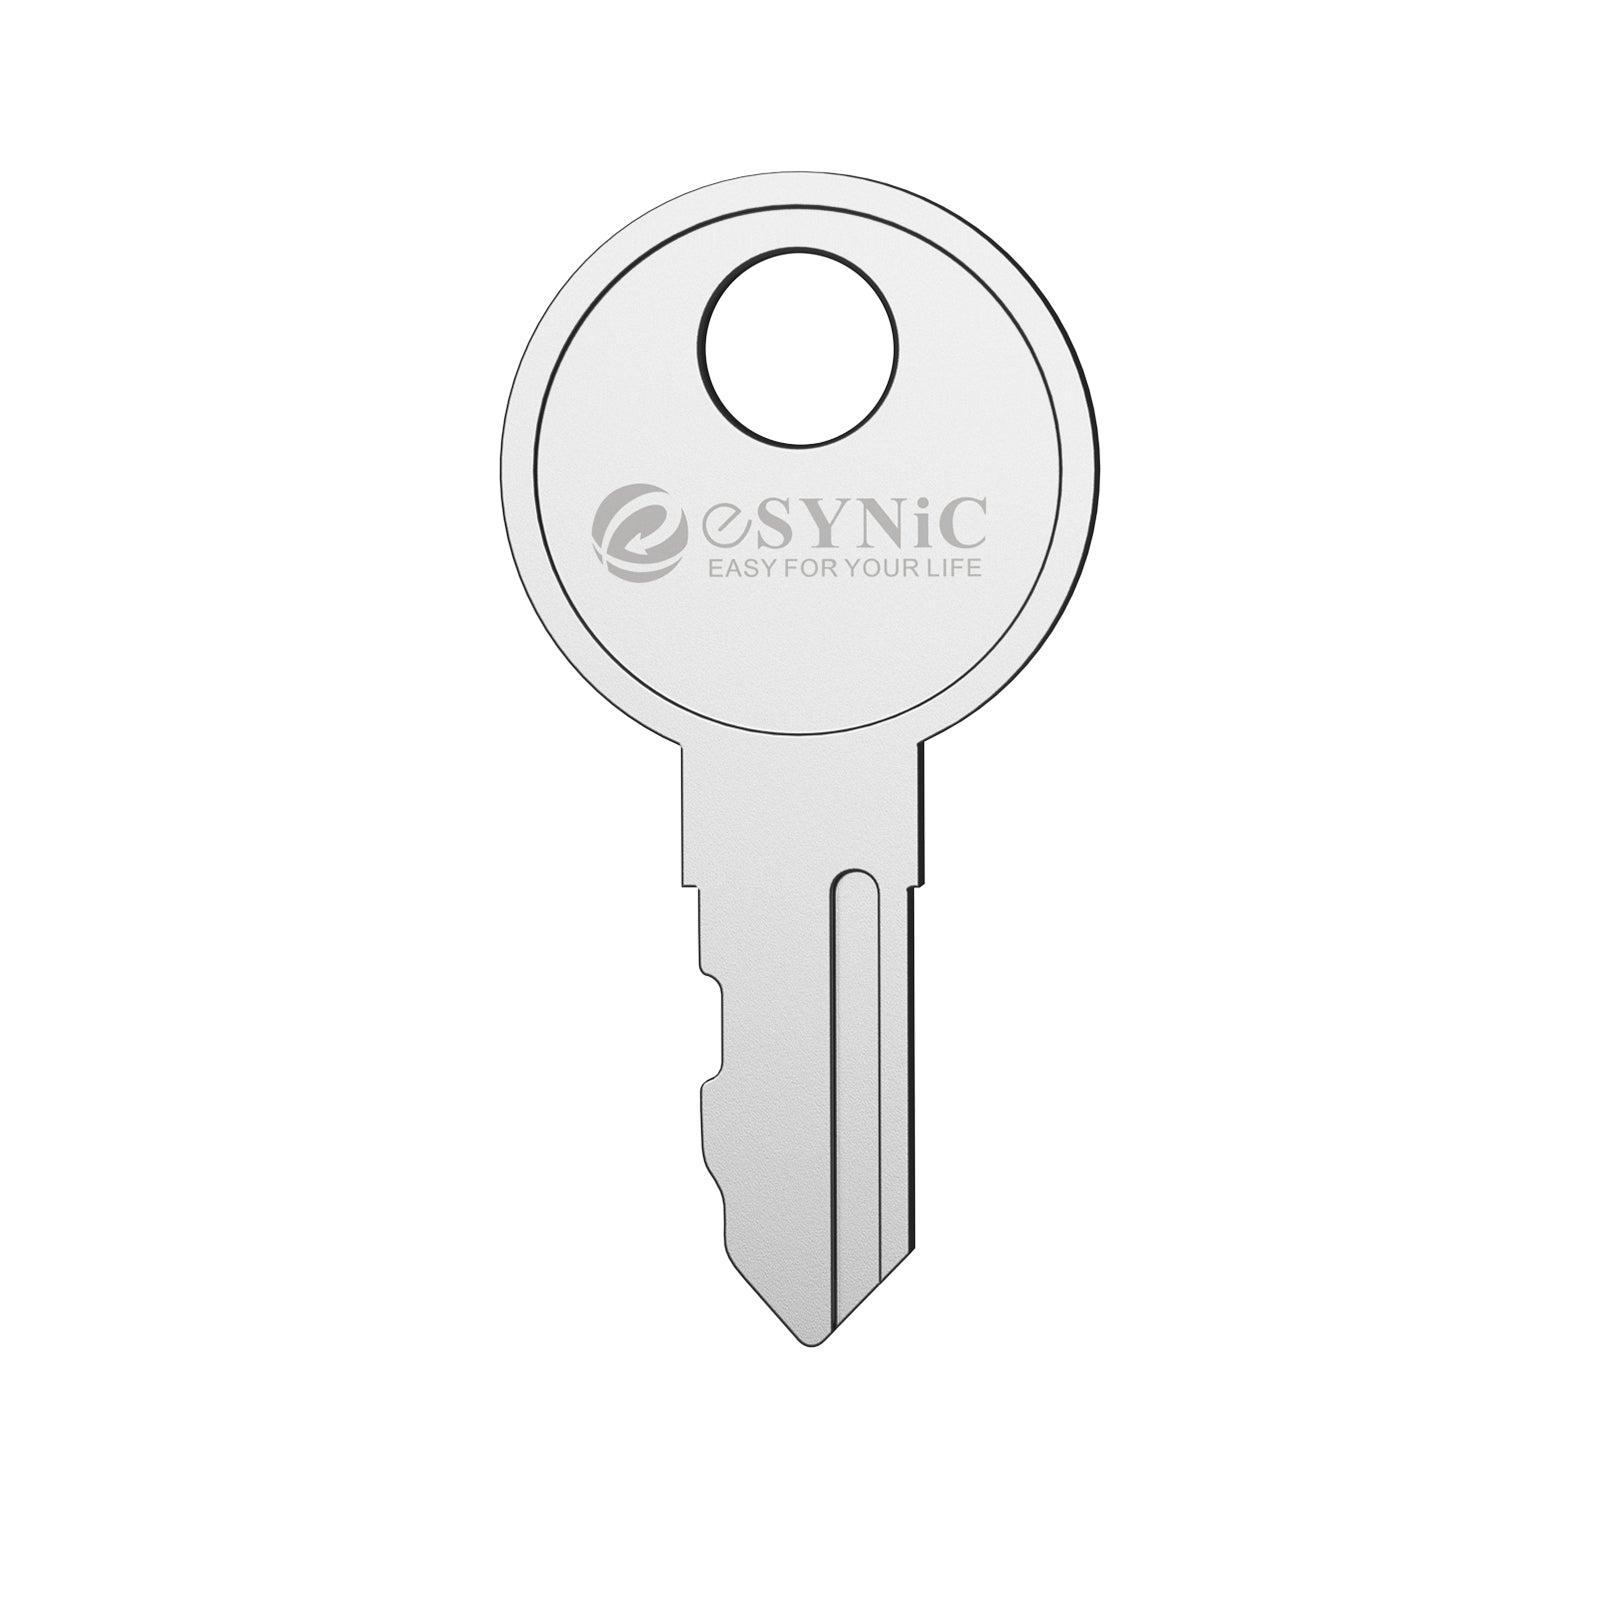 eSynic 2Pcs Professional Window Restrictor Locks Baby Security